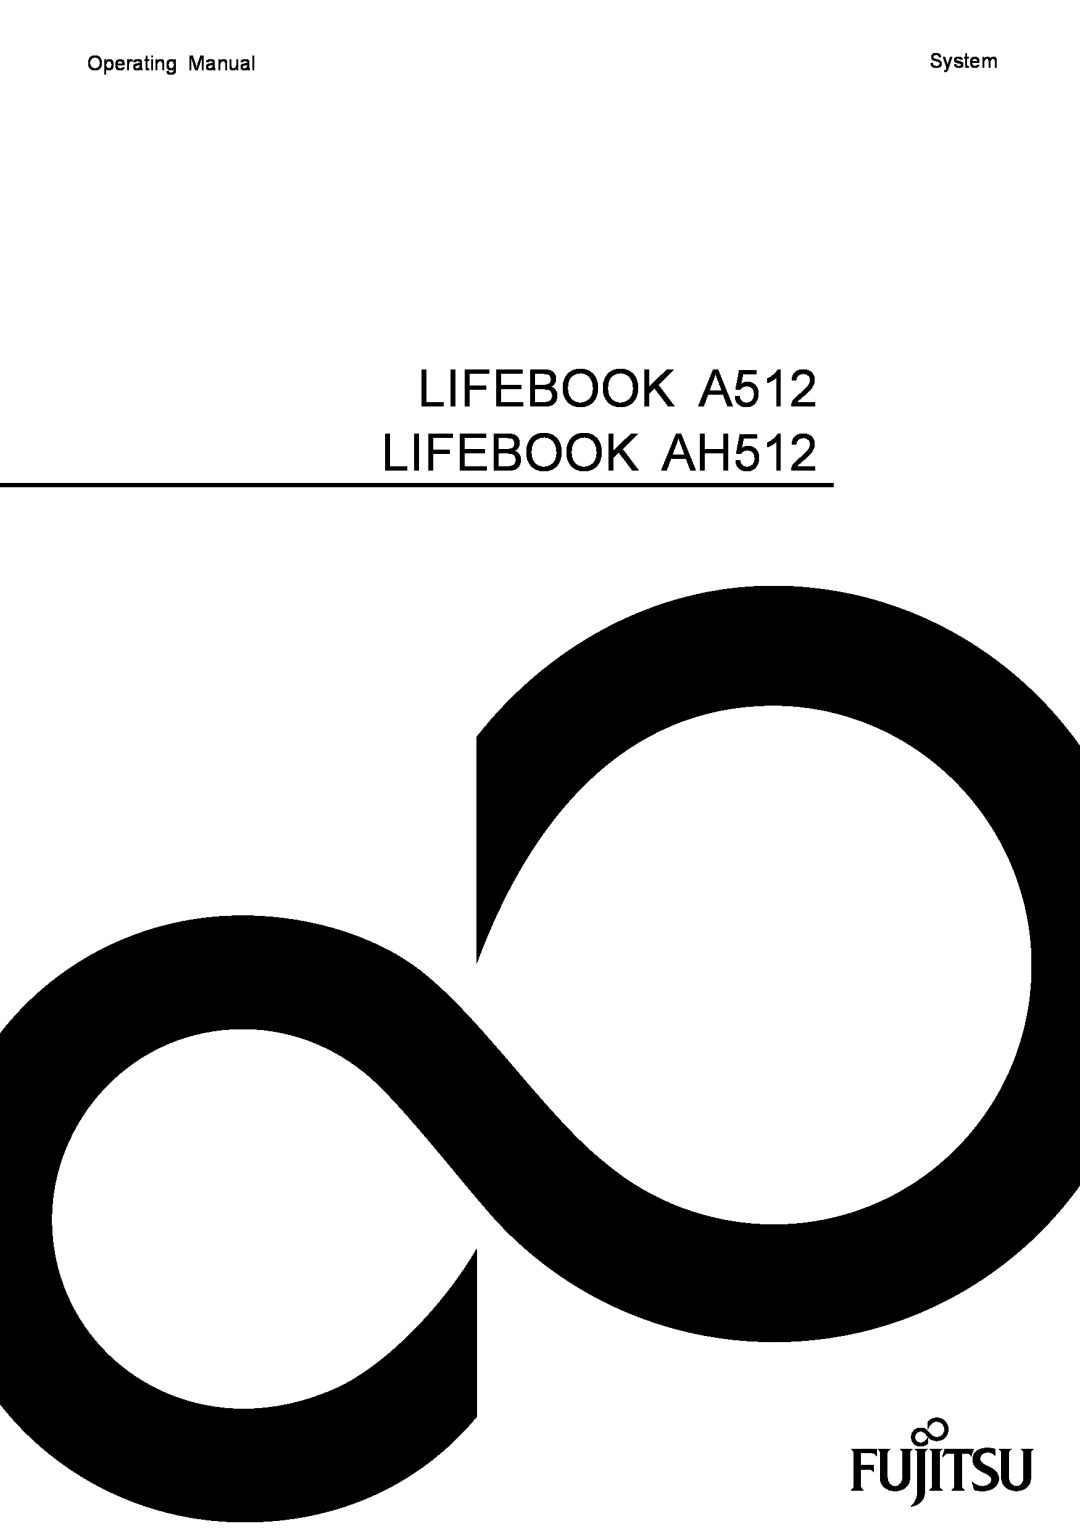 Fujitsu manual LIFEBOOK A512 LIFEBOOK AH512, Operating Manual, System 